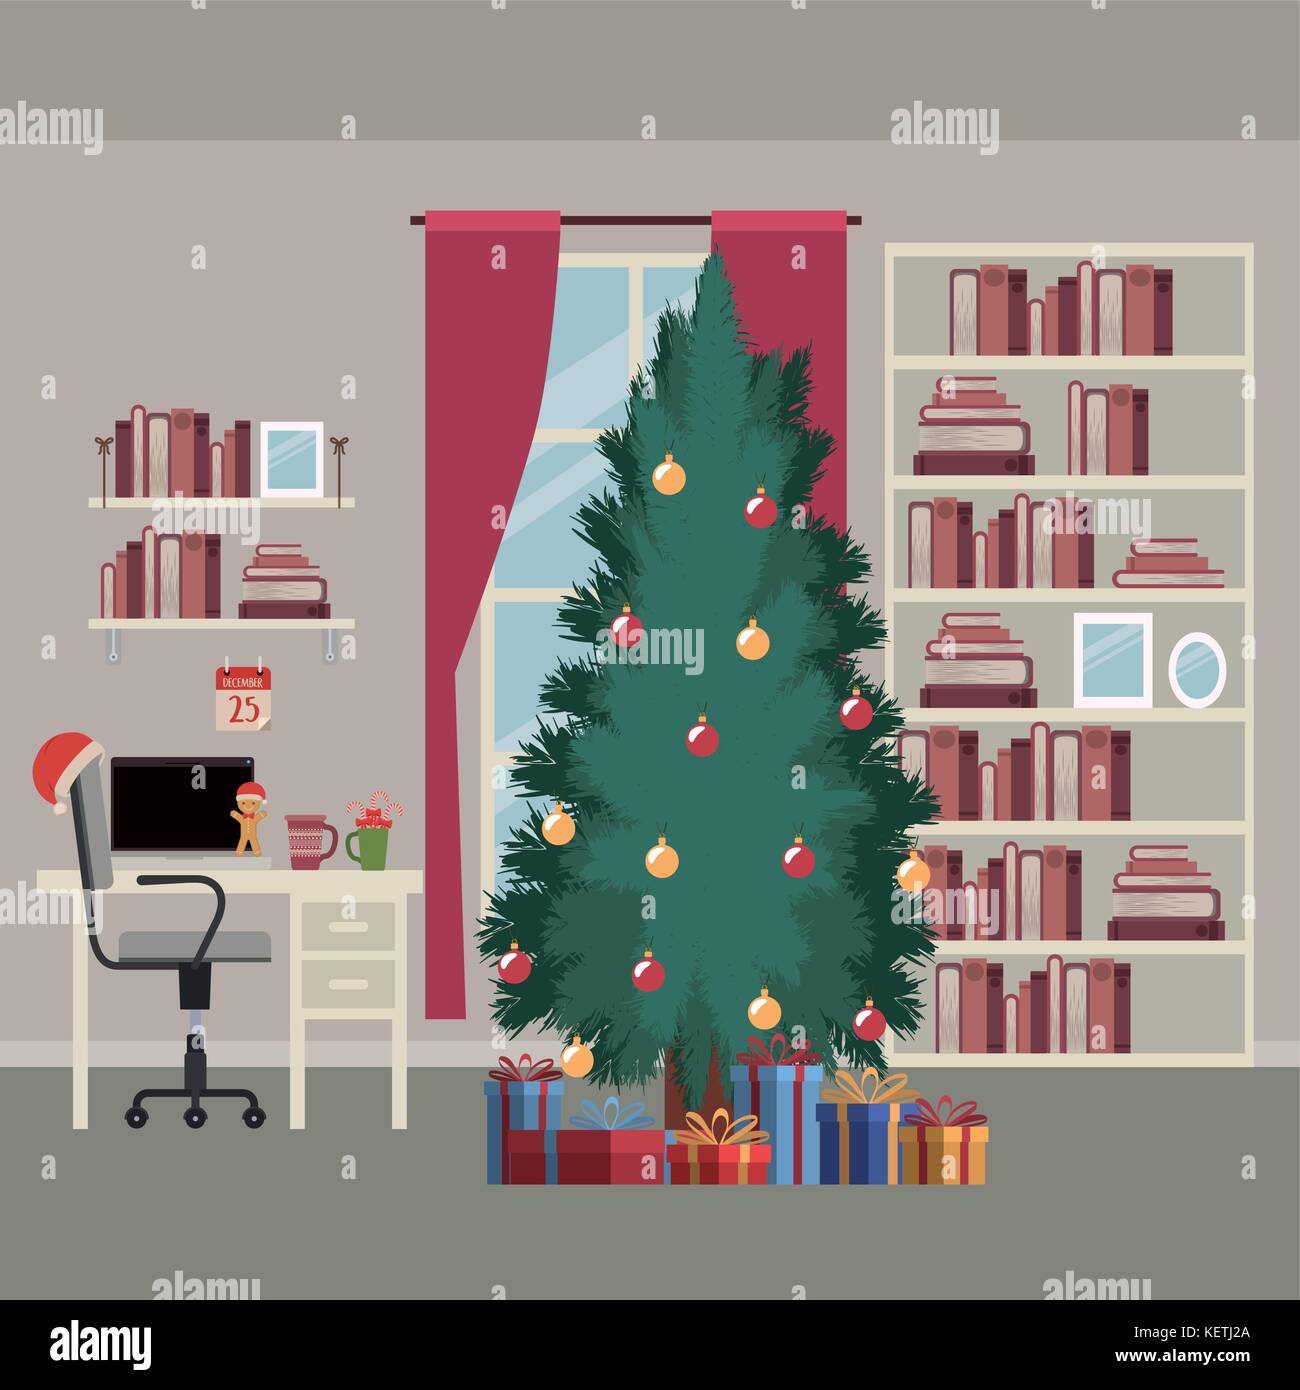 Christmas Home Scene With Window Background And Bookshelf Of Books